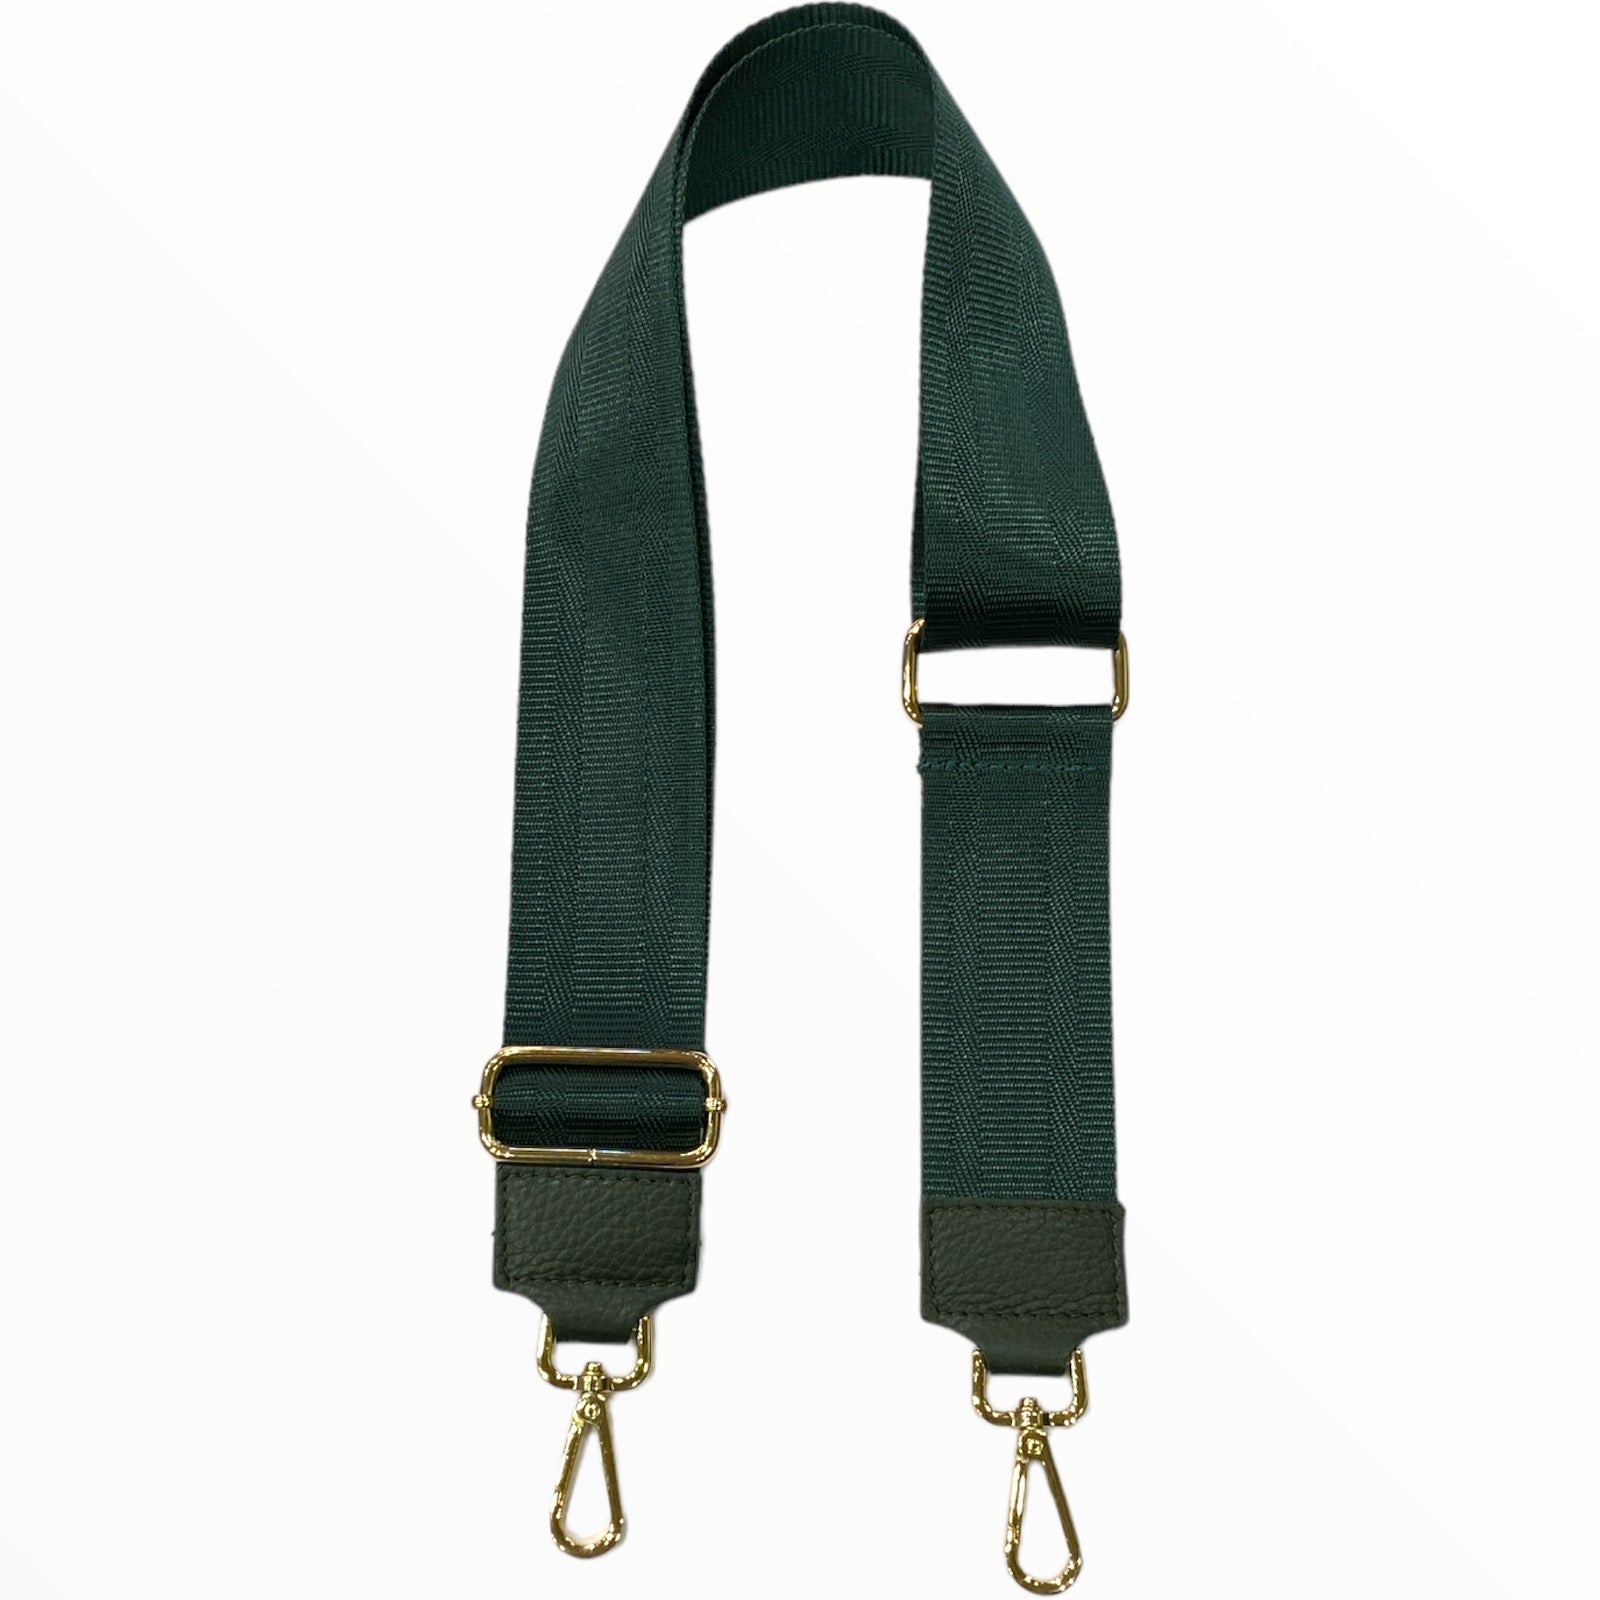 Dark green minimal adjustable strap with gold metals